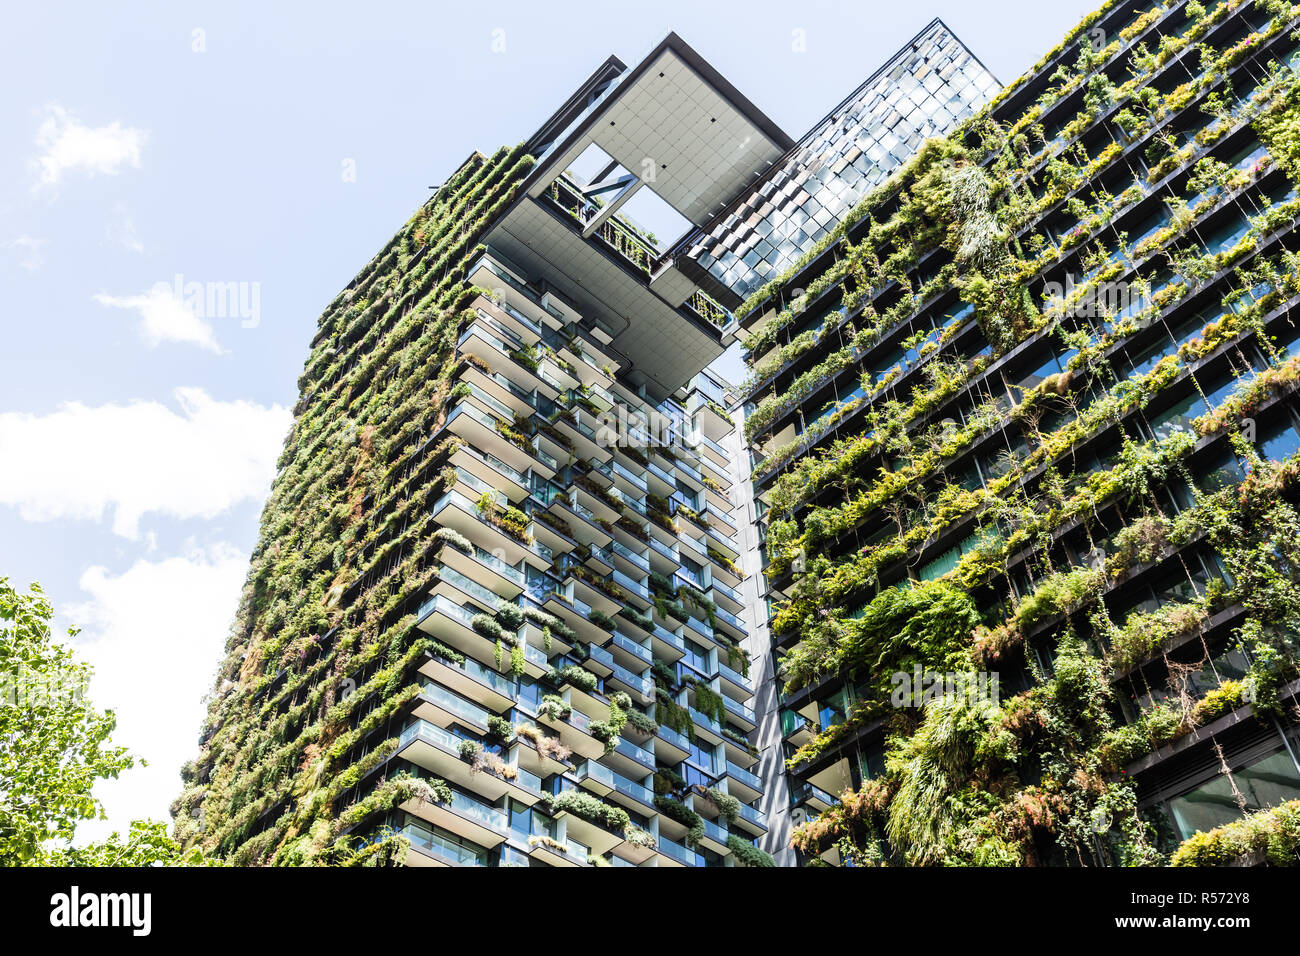 The Award-winning One Central park development in Sydney Stock Photo